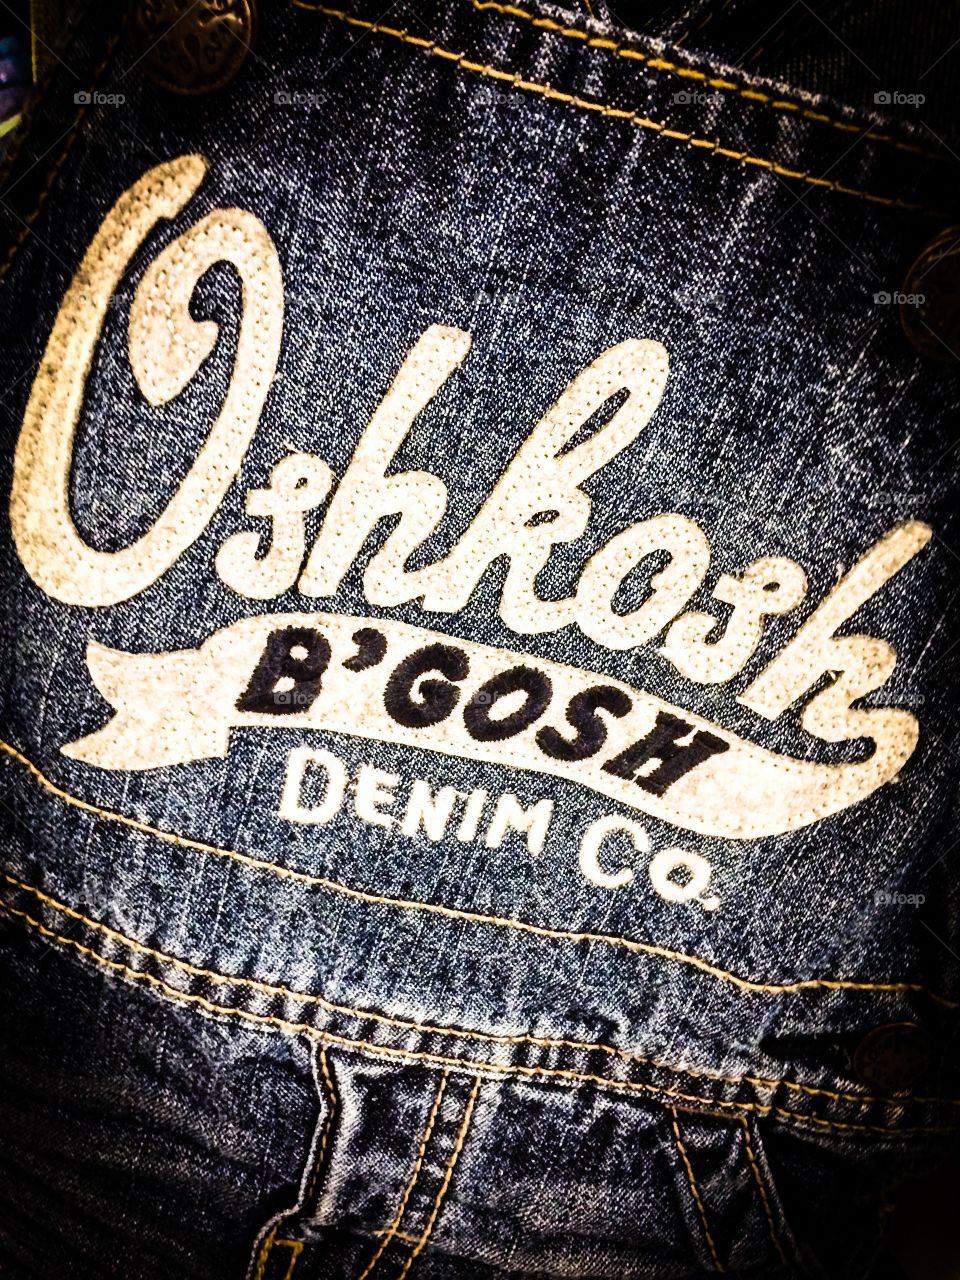 Oshkosh B'gosh overalls for all occasions. 